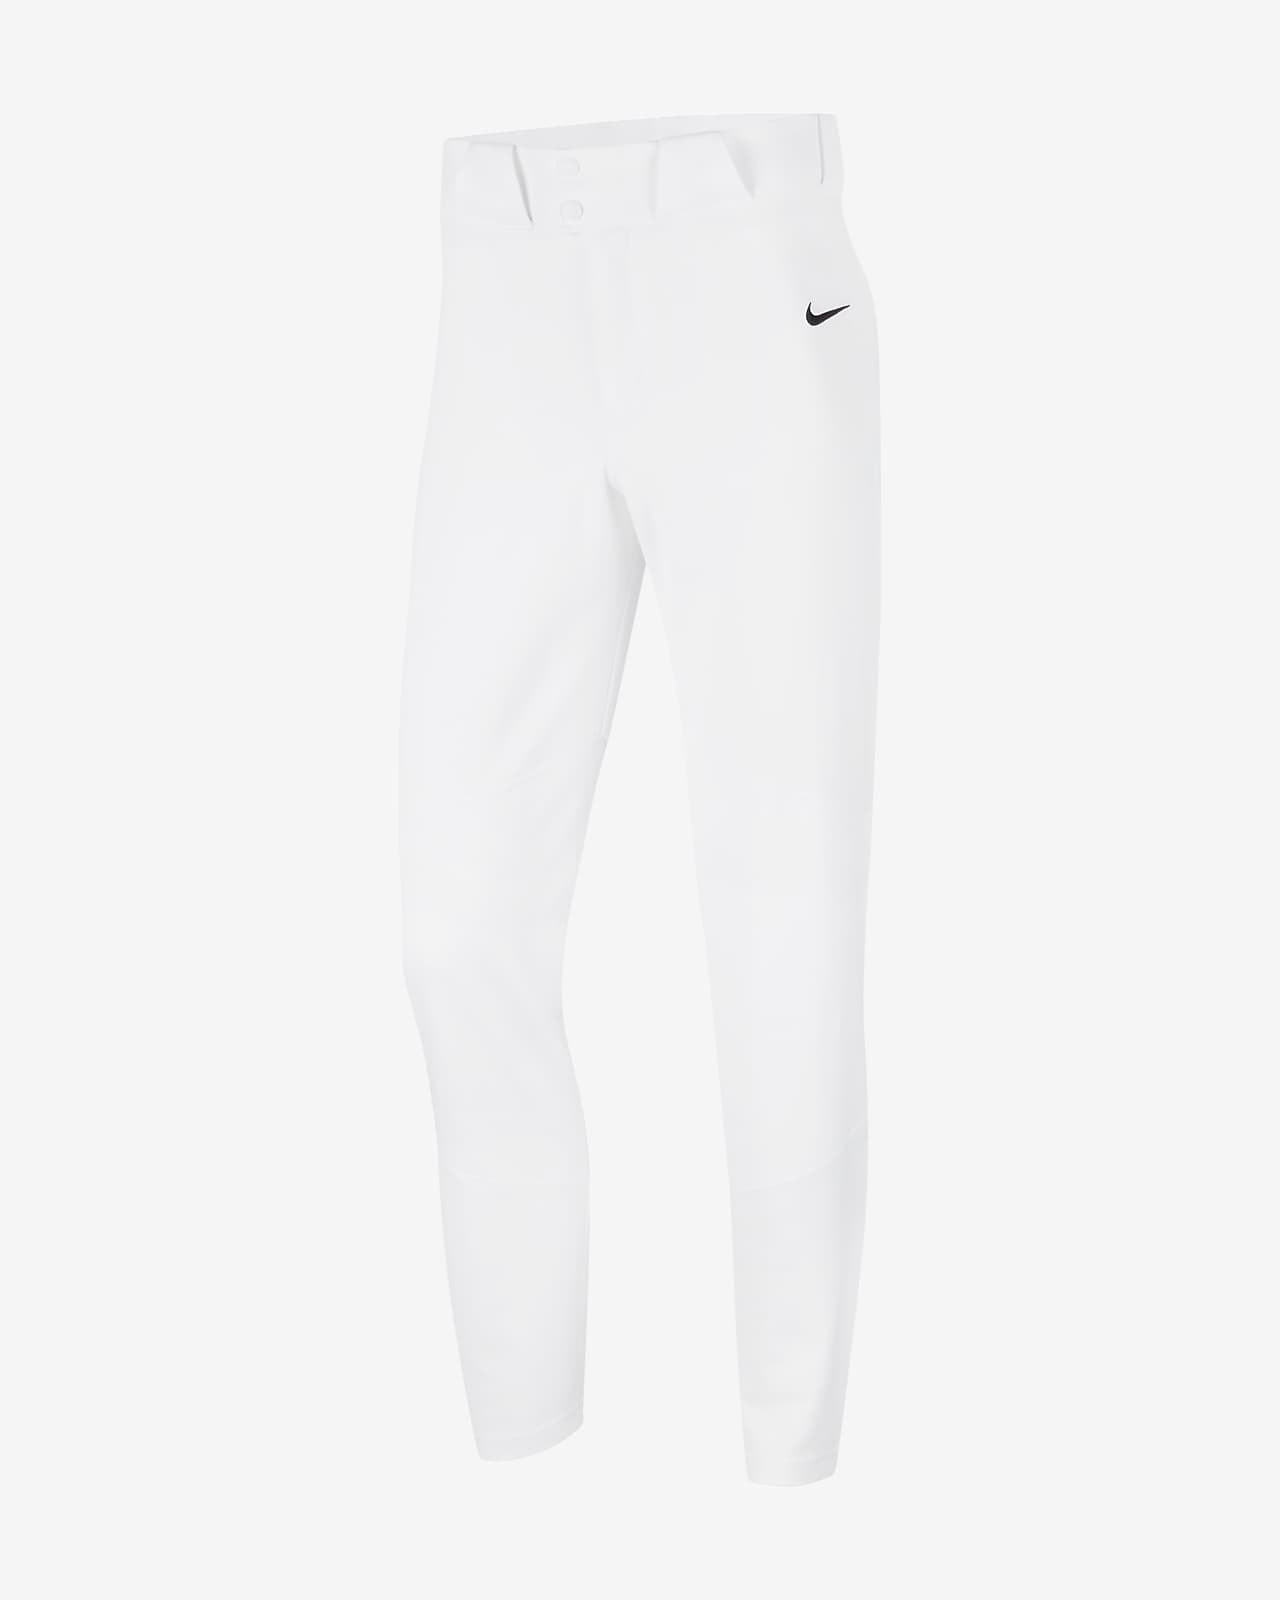 Diálogo Del Sur cera Pantalones de béisbol para hombre Nike Vapor Select. Nike.com